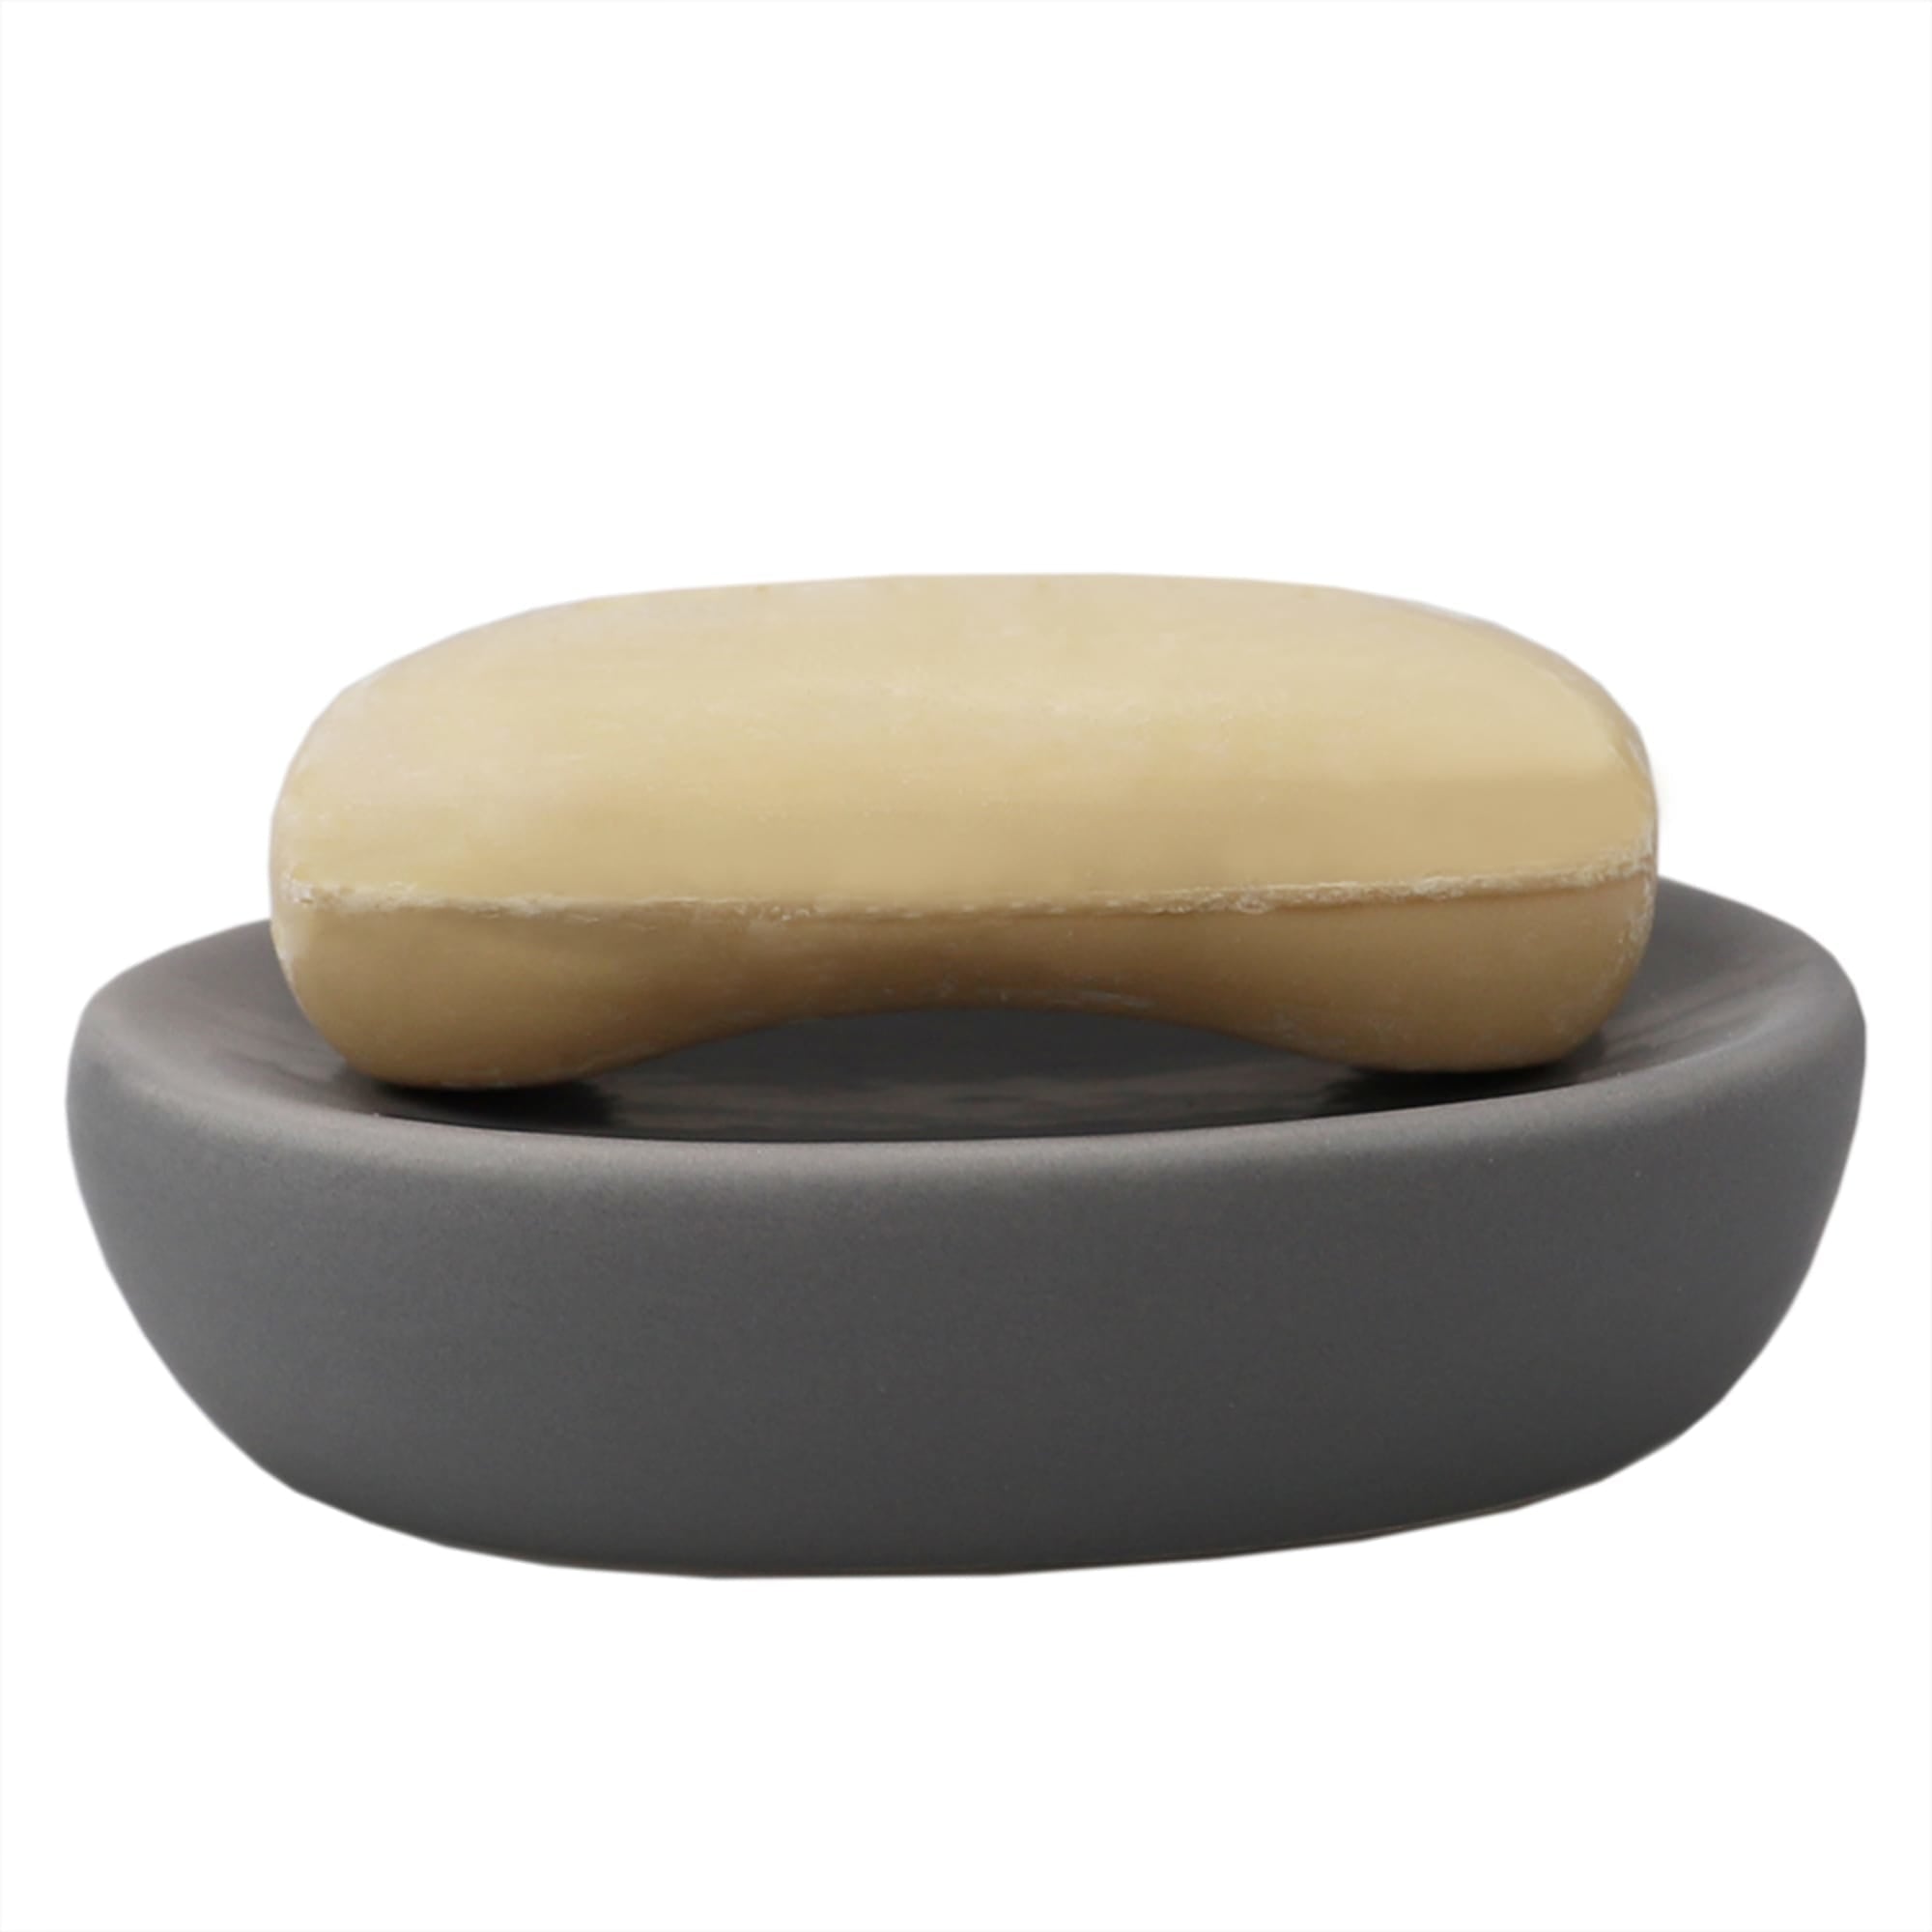 Home Basics Luxem 4 Piece Ceramic Bath Accessory Set, Grey $10.00 EACH, CASE PACK OF 12